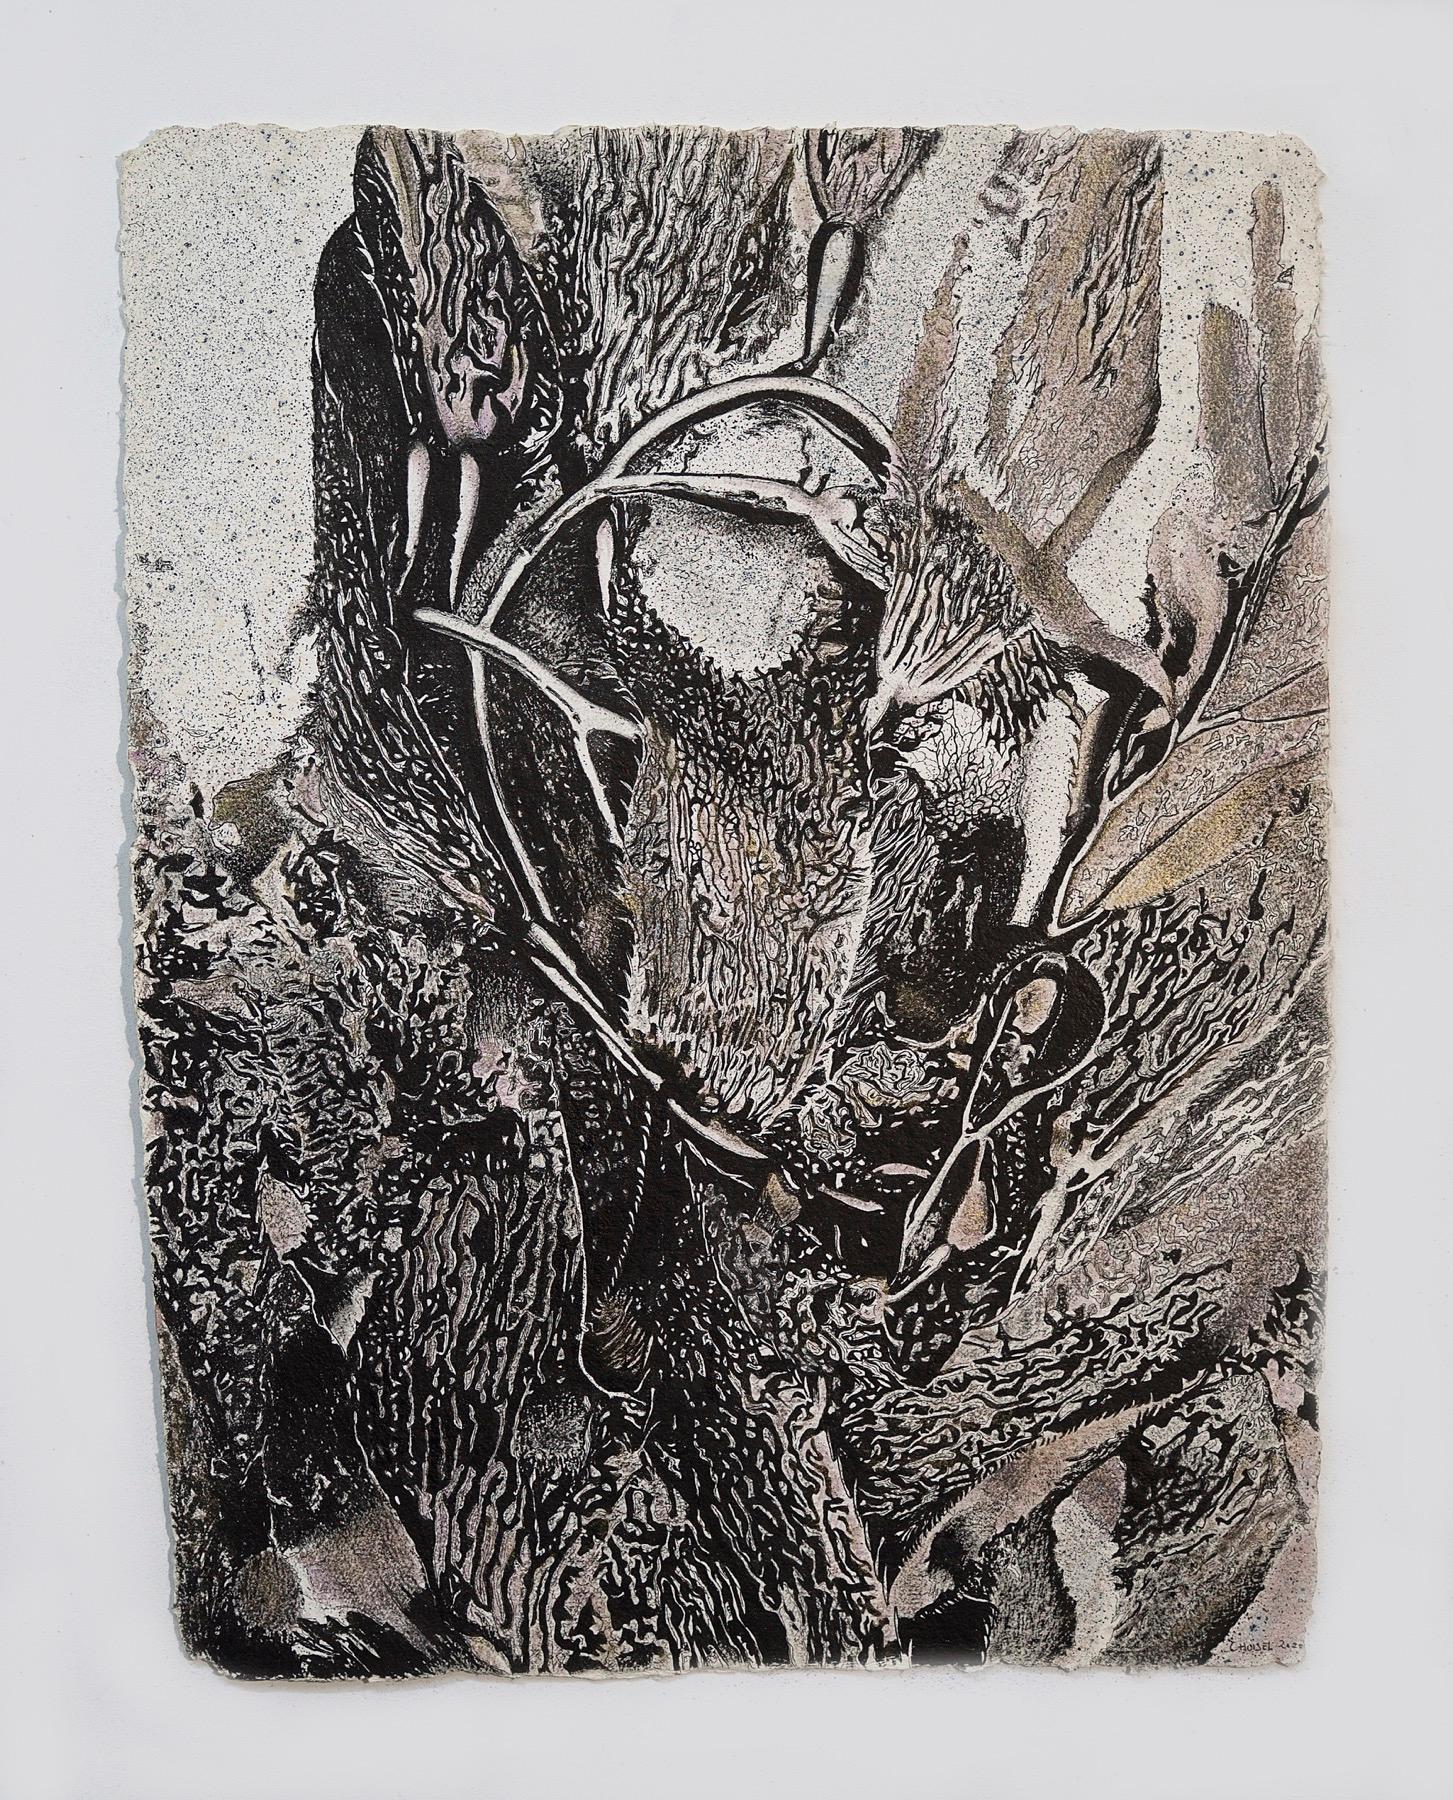 Frédéric Choisel Abstract Painting - Alga Aligata No. 1 - seaweed kelp oceanic abstracted work on paper